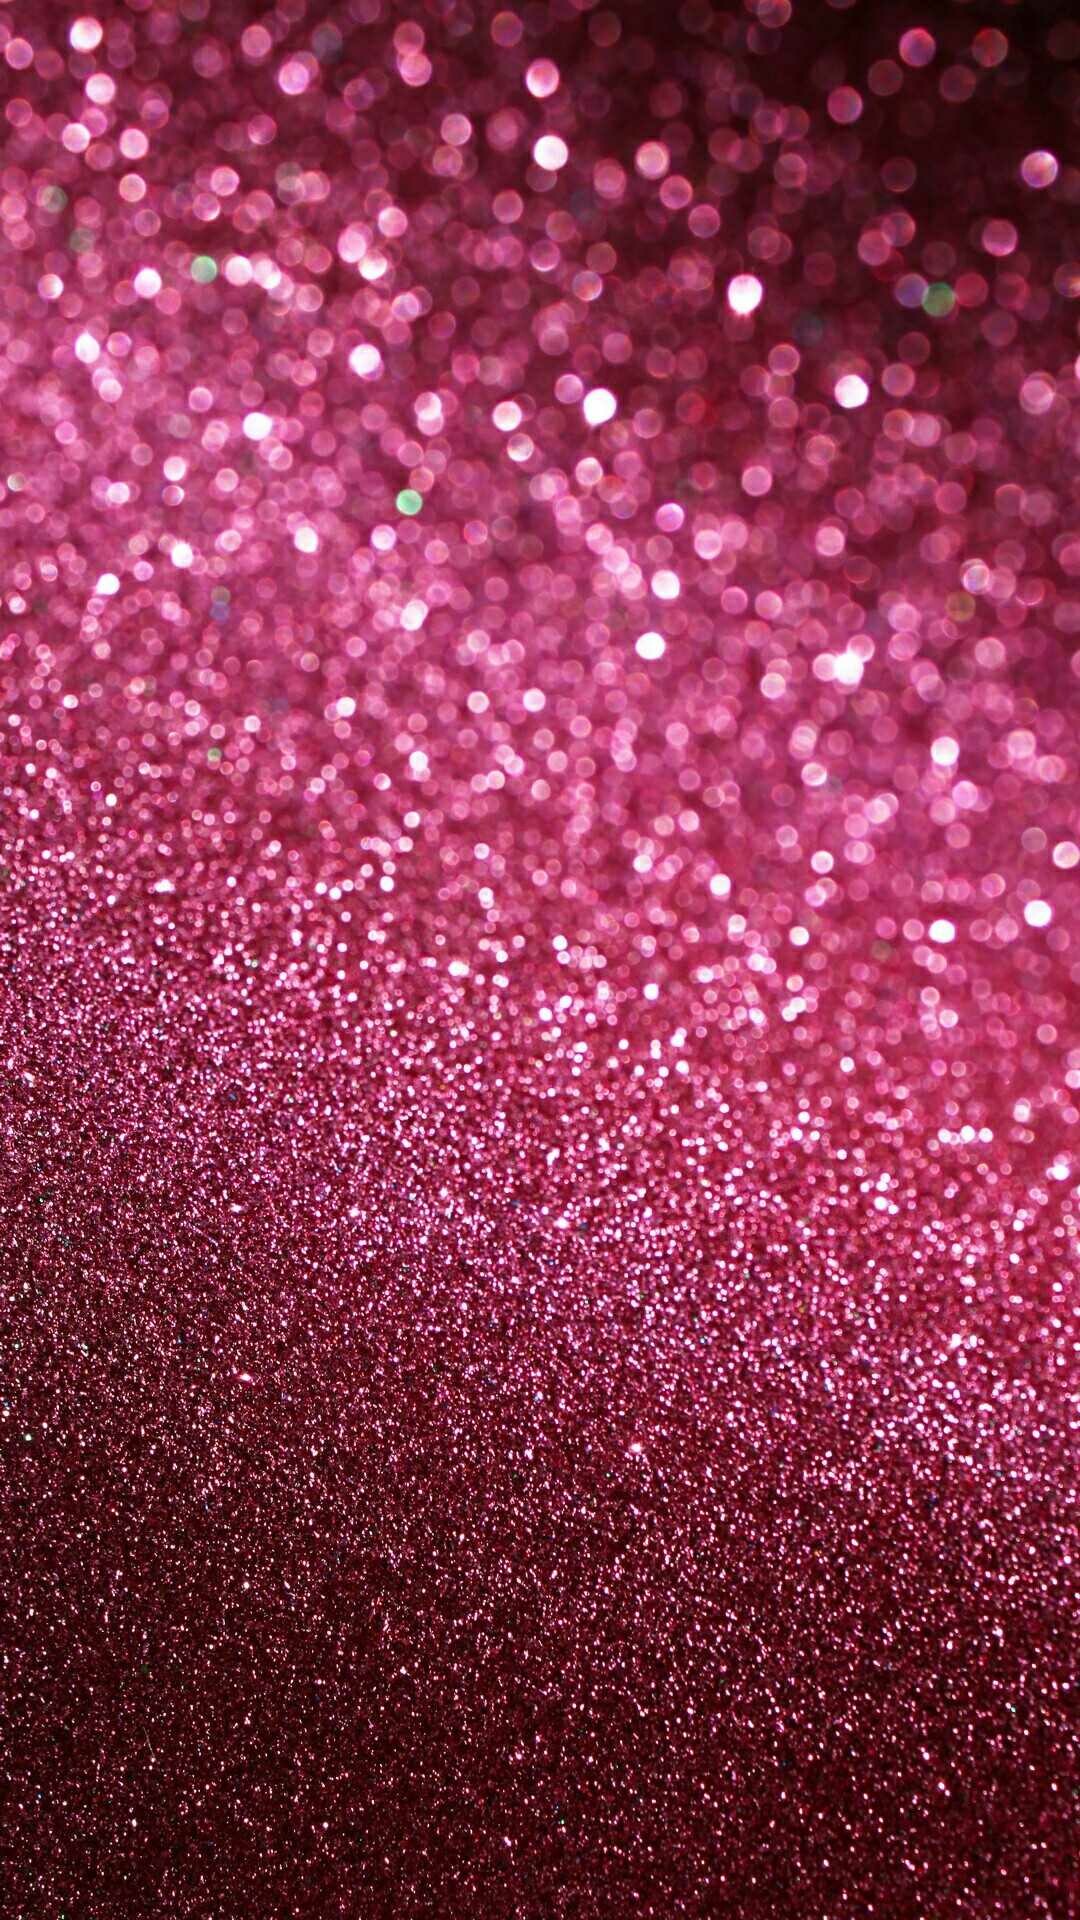 Sparkle: Glitter, A small, typically shiny ornament, Decoration. 1080x1920 Full HD Wallpaper.